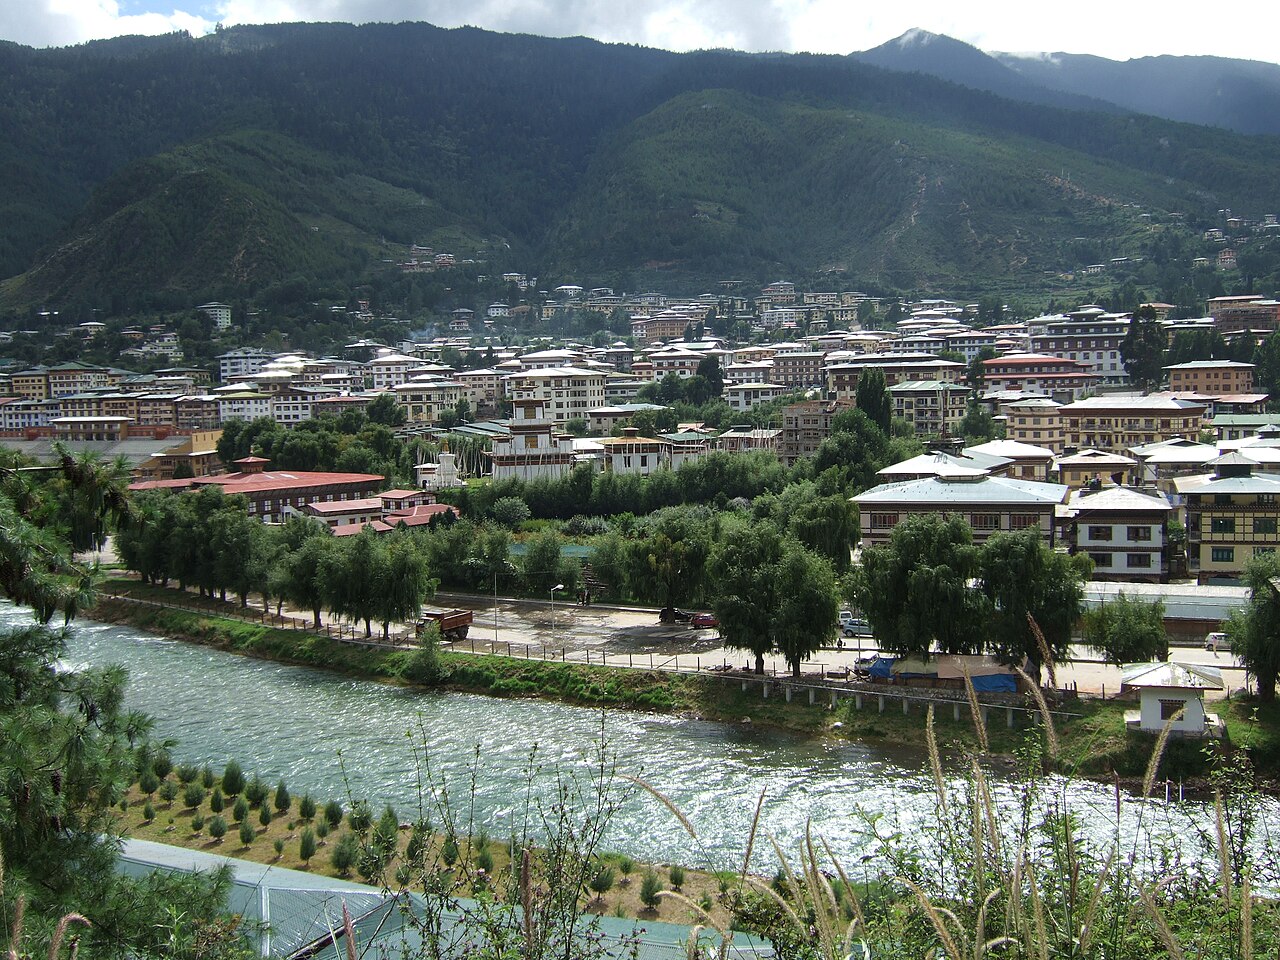 https://upload.wikimedia.org/wikipedia/commons/thumb/c/c3/Thimphu_view_080907.JPG/1280px-Thimphu_view_080907.JPG